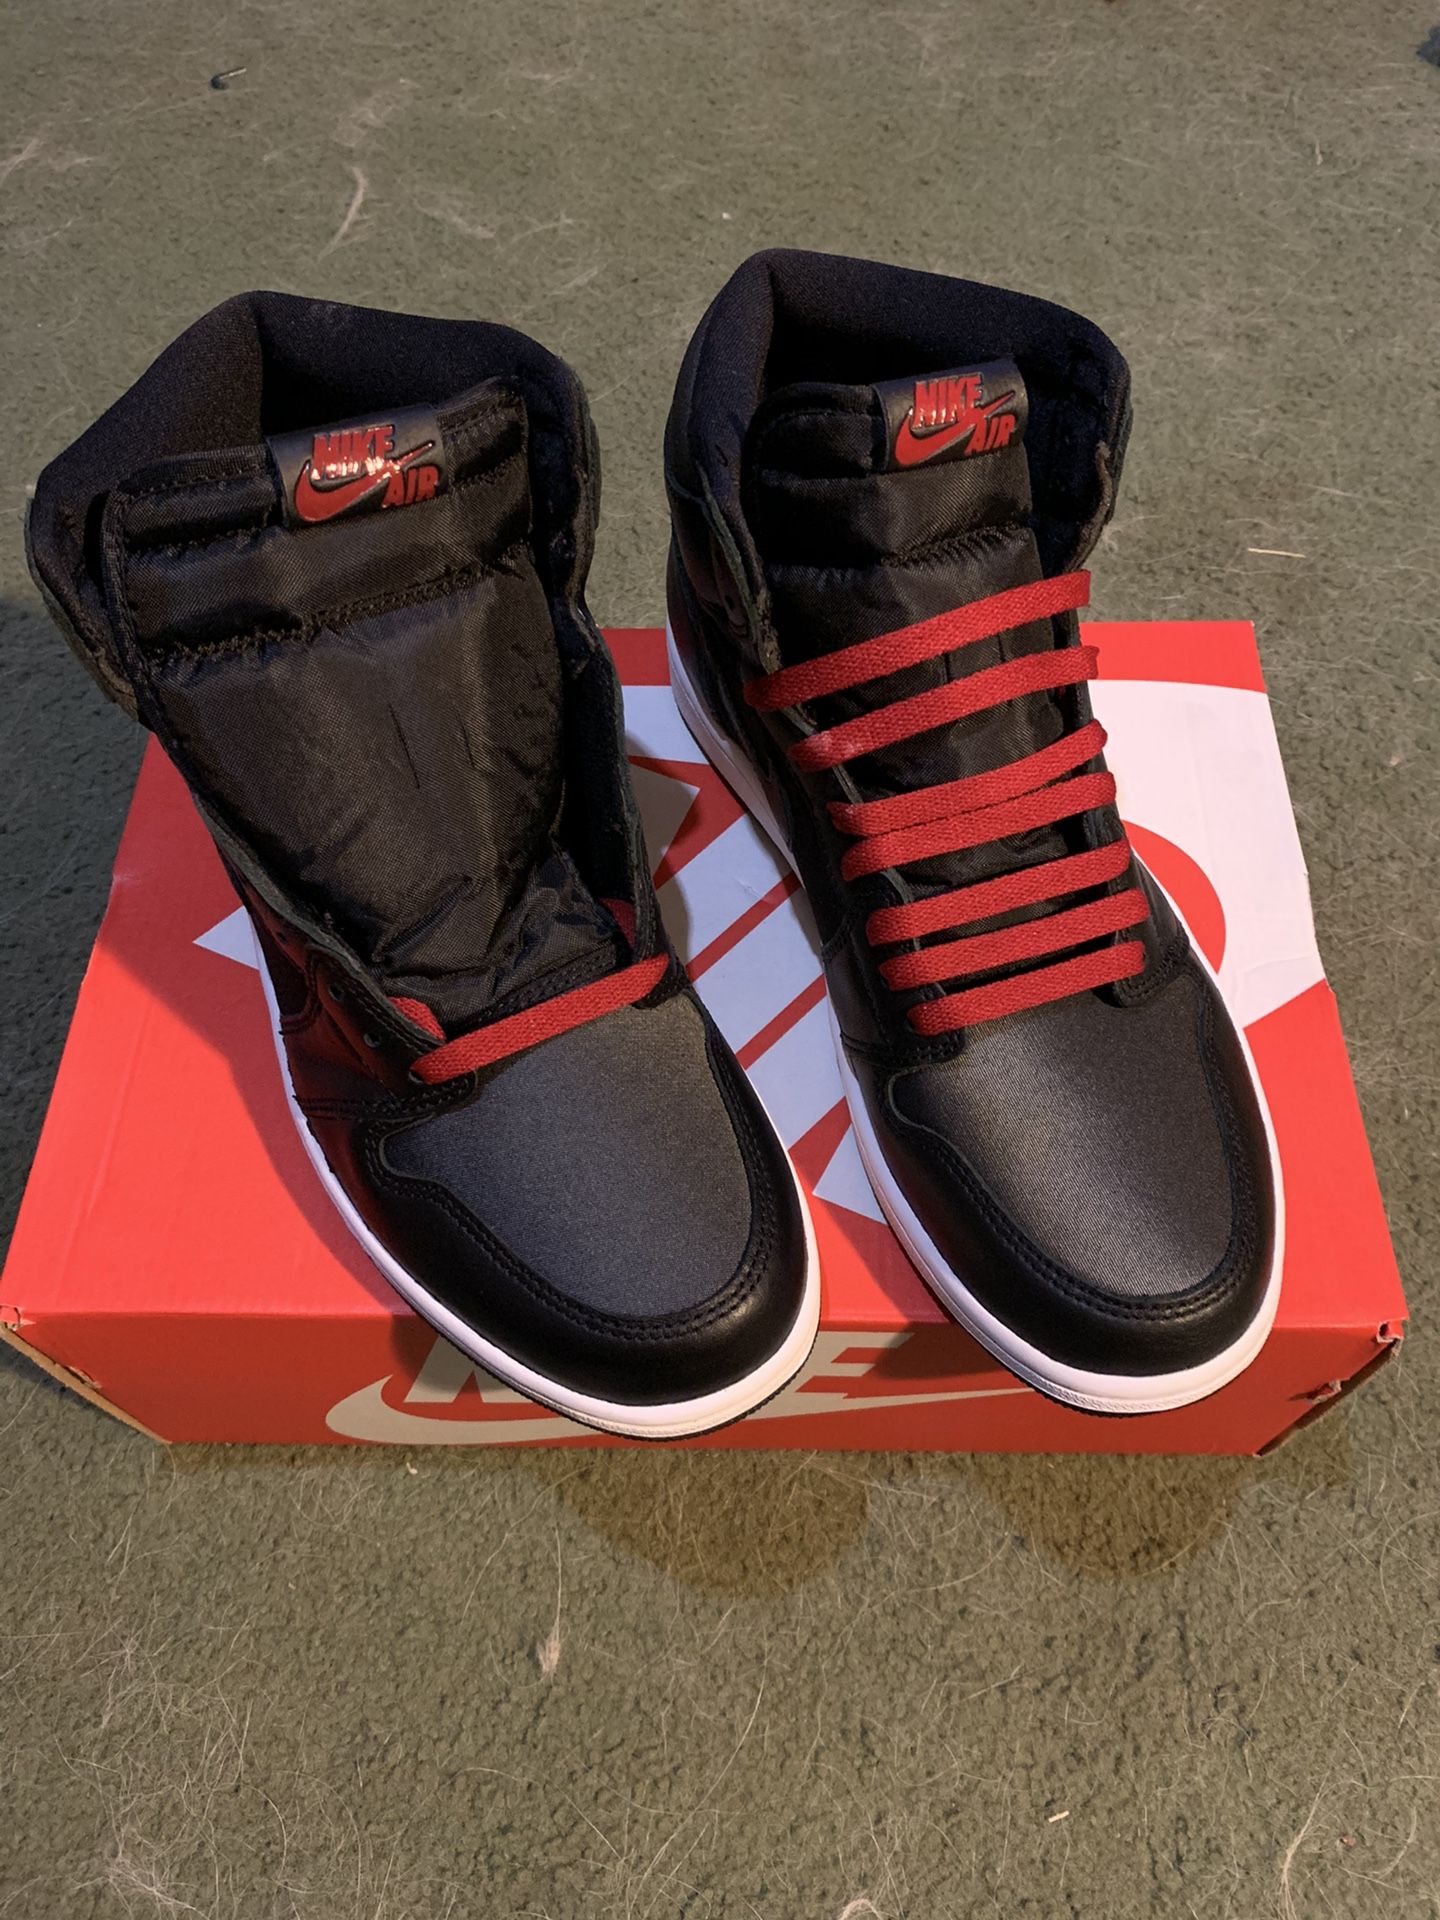 Nike air Jordan retro 1 high OG “black satin”